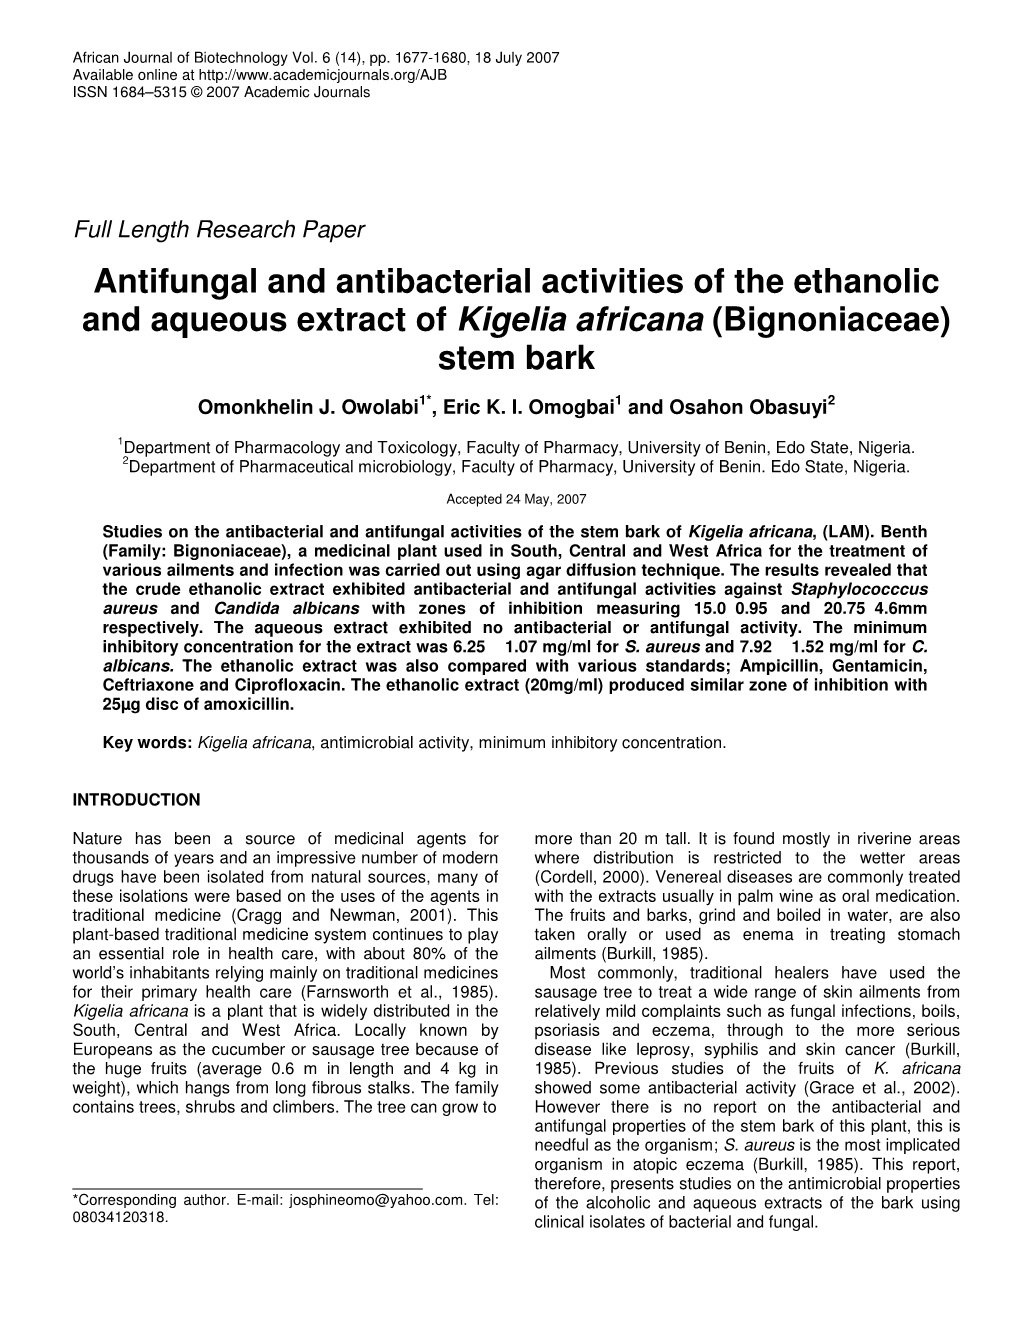 Antifungal and Antibacterial Activities of the Ethanolic and Aqueous Extract of Kigelia Africana (Bignoniaceae) Stem Bark